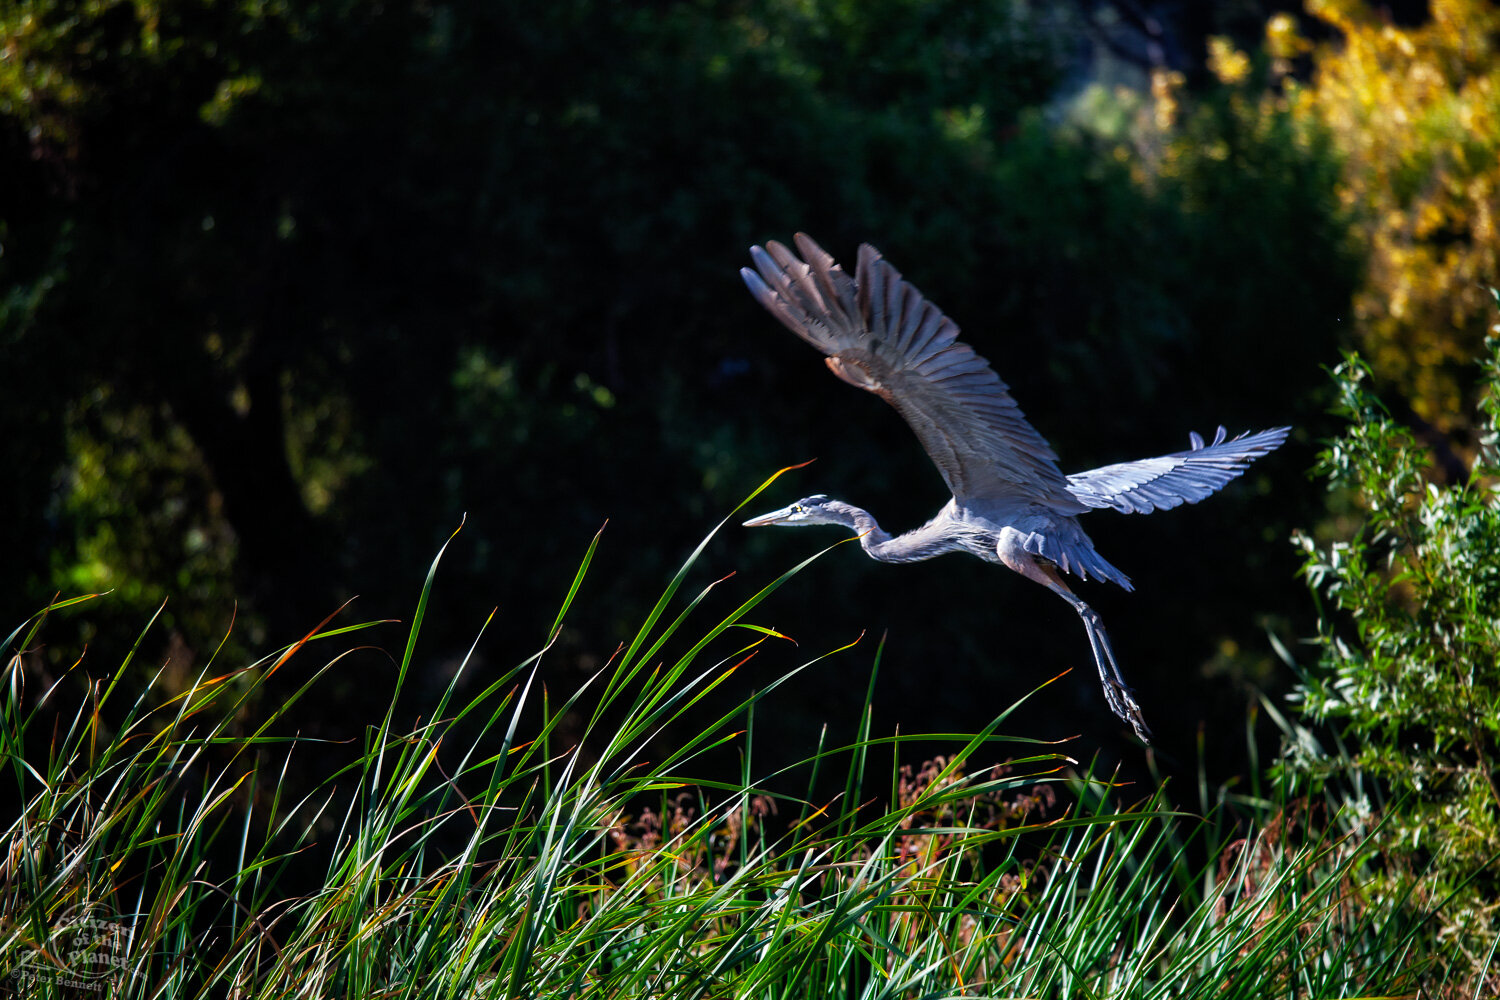  Great Blue Heron Taking Flight, Glendale Narrows. 